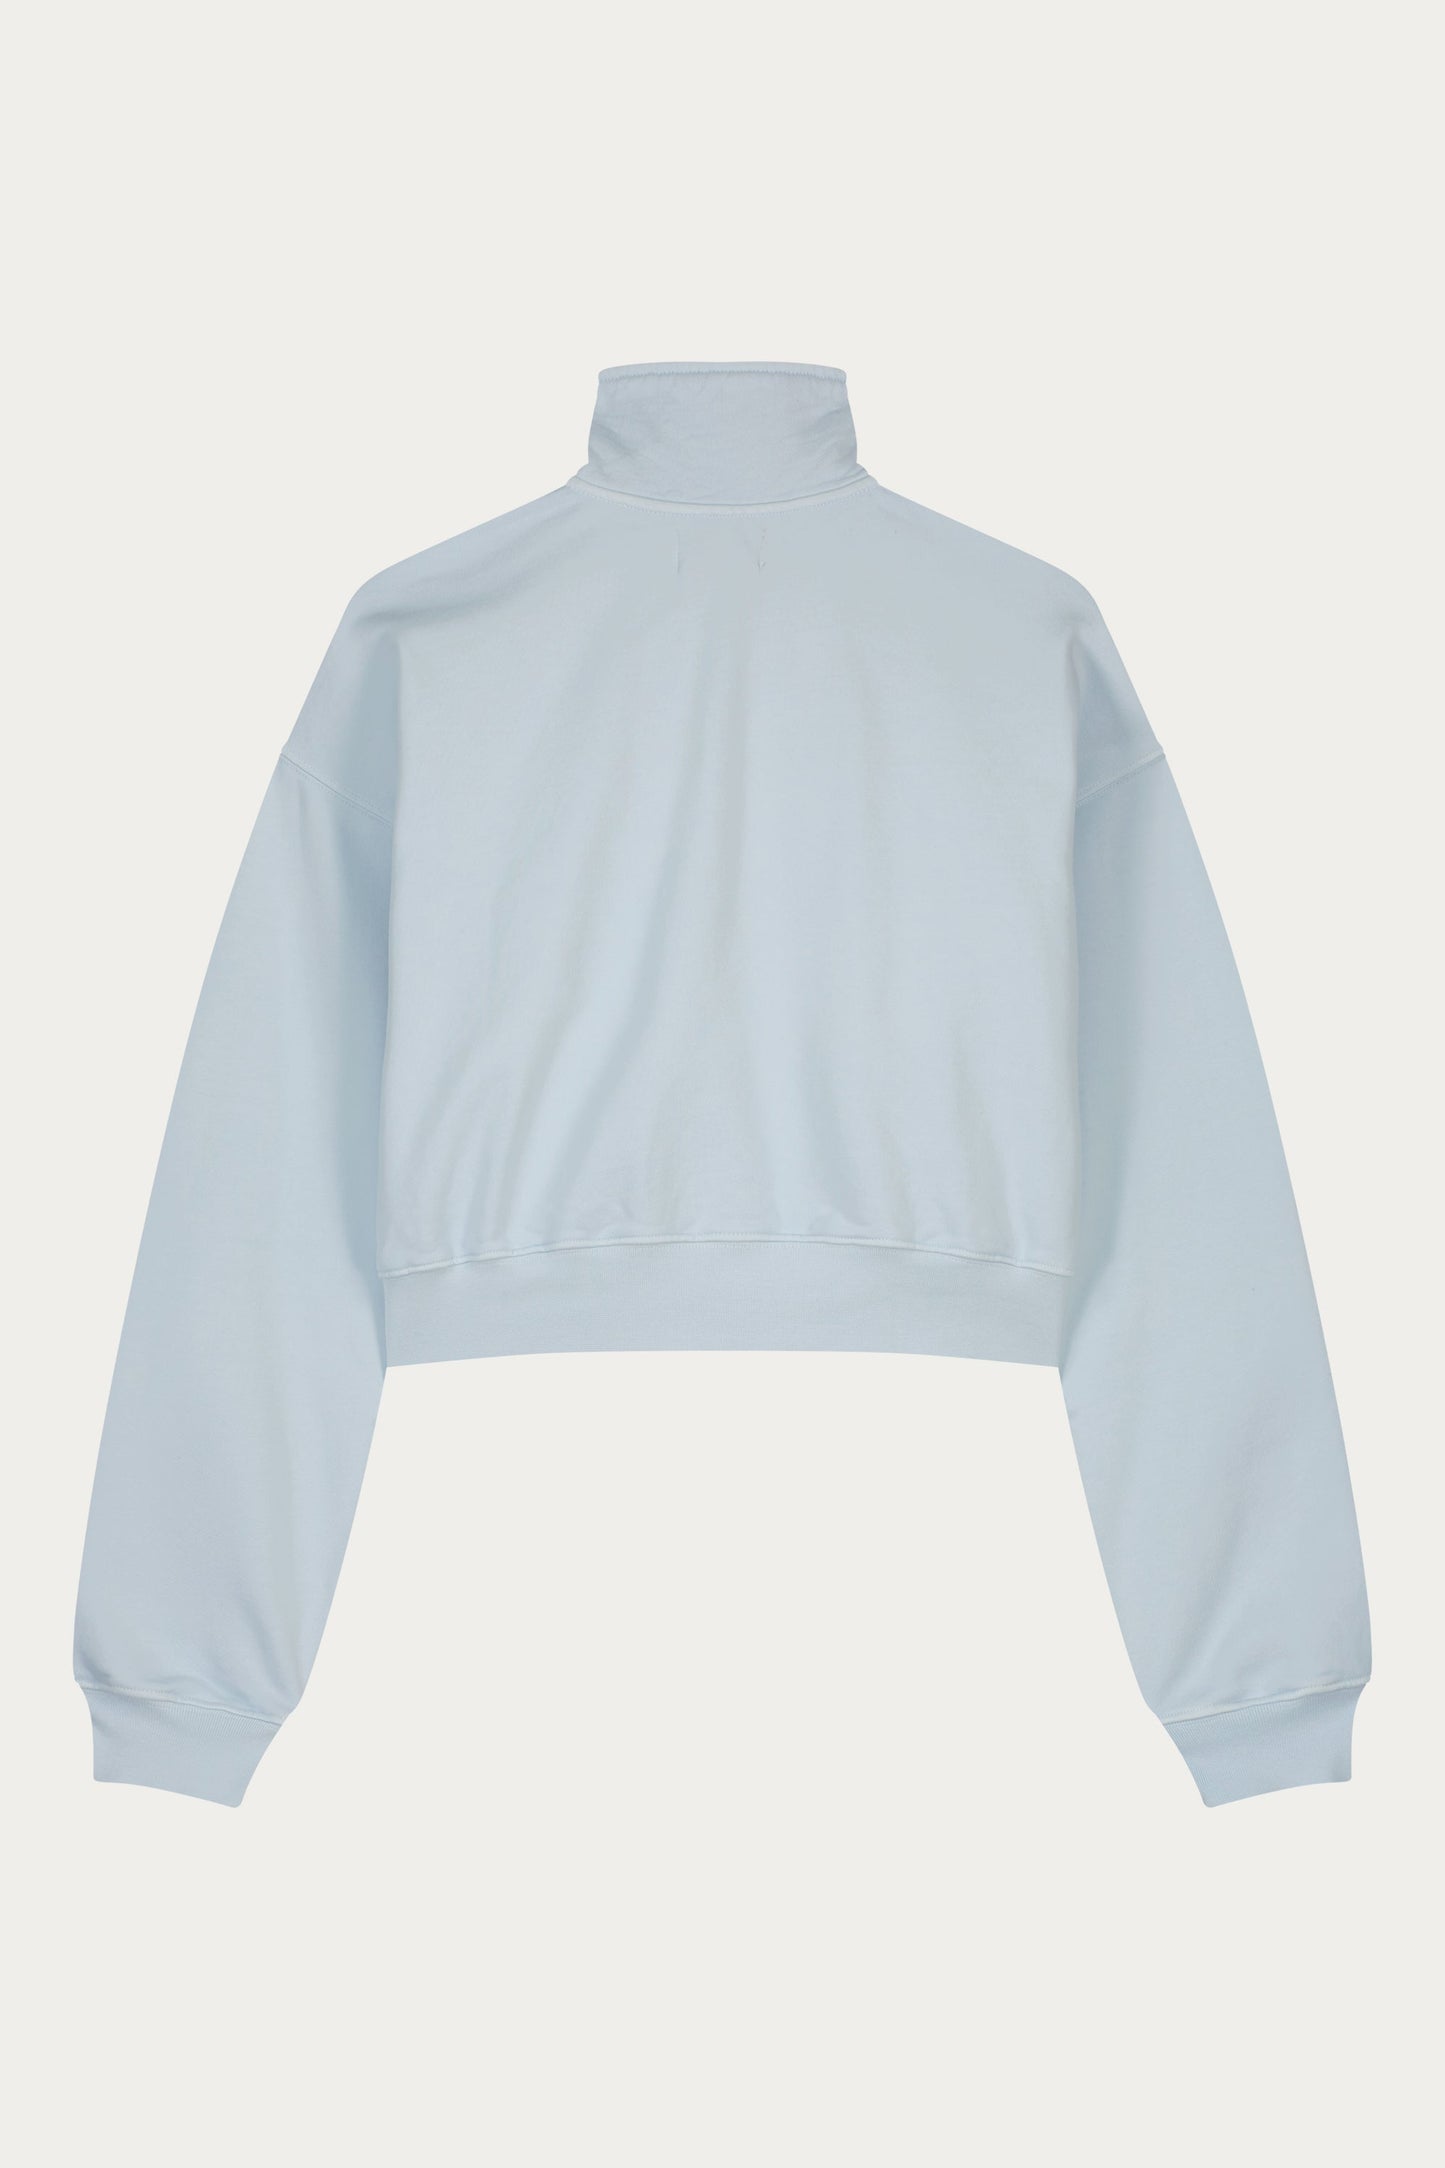 Runyon Cropped Quarter-Zip Sweatshirt